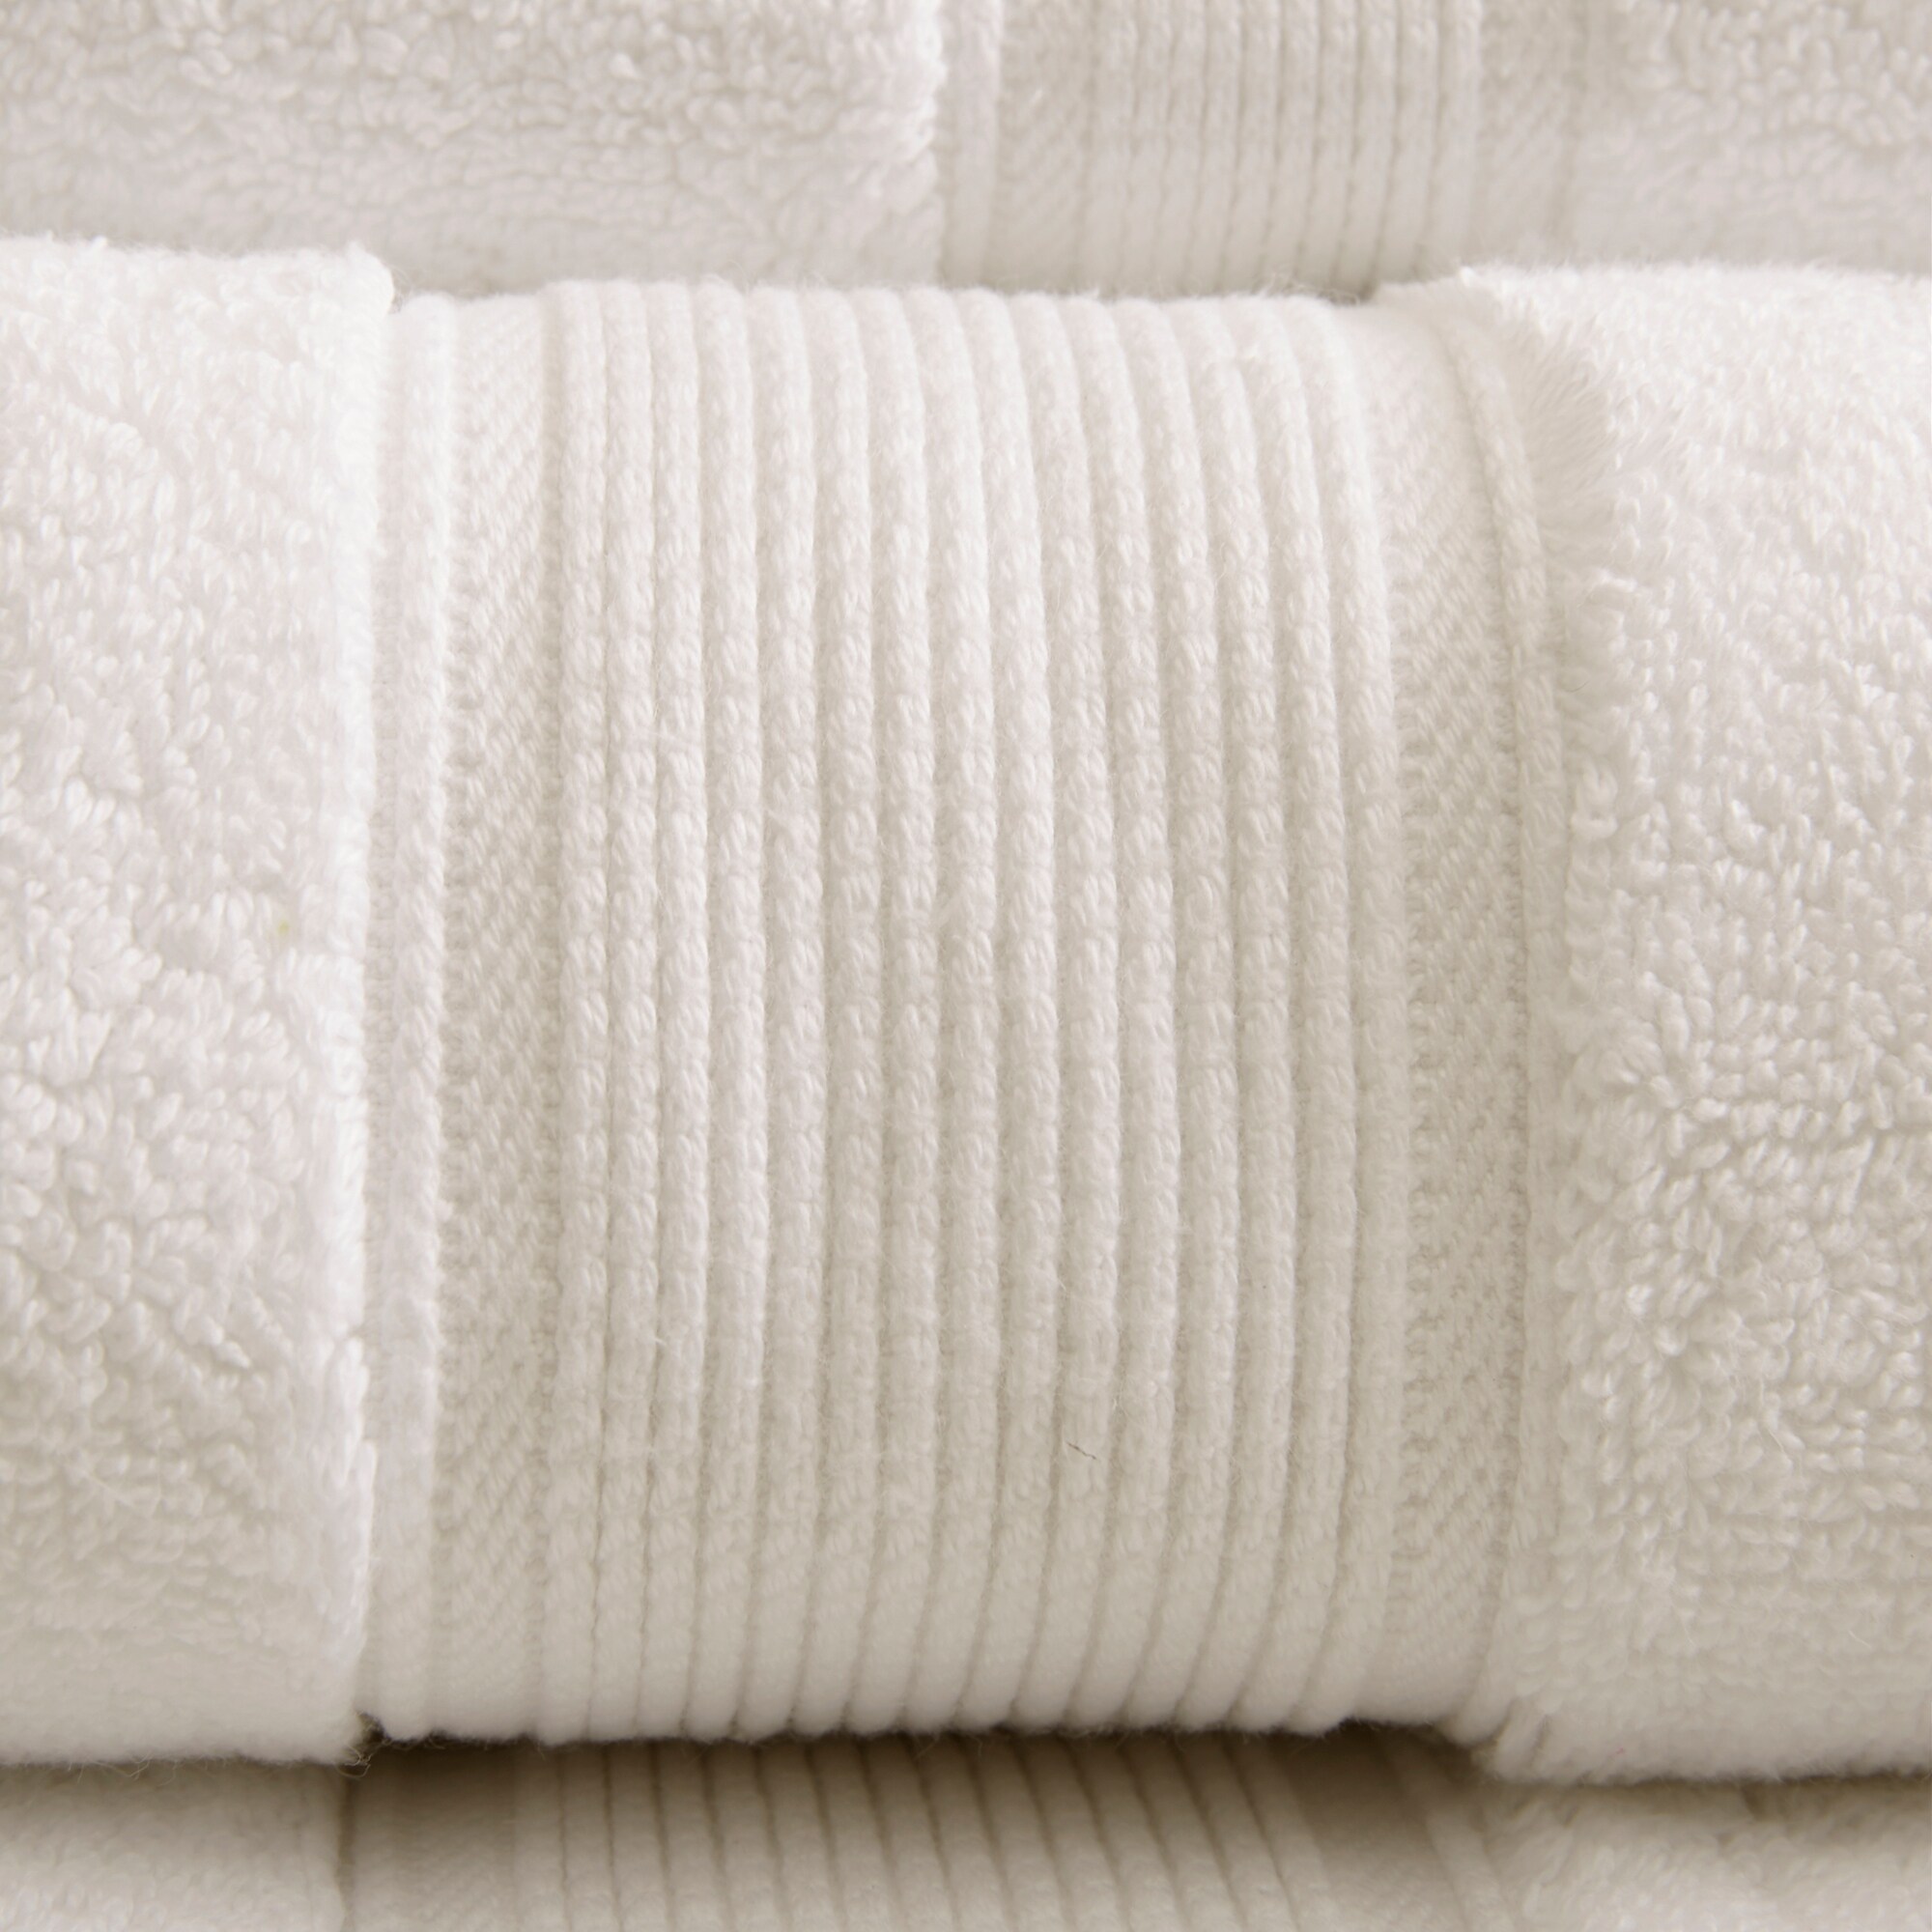 Maura 8 Piece Bath Towel Set.2 Extra Large 30x56 Premium